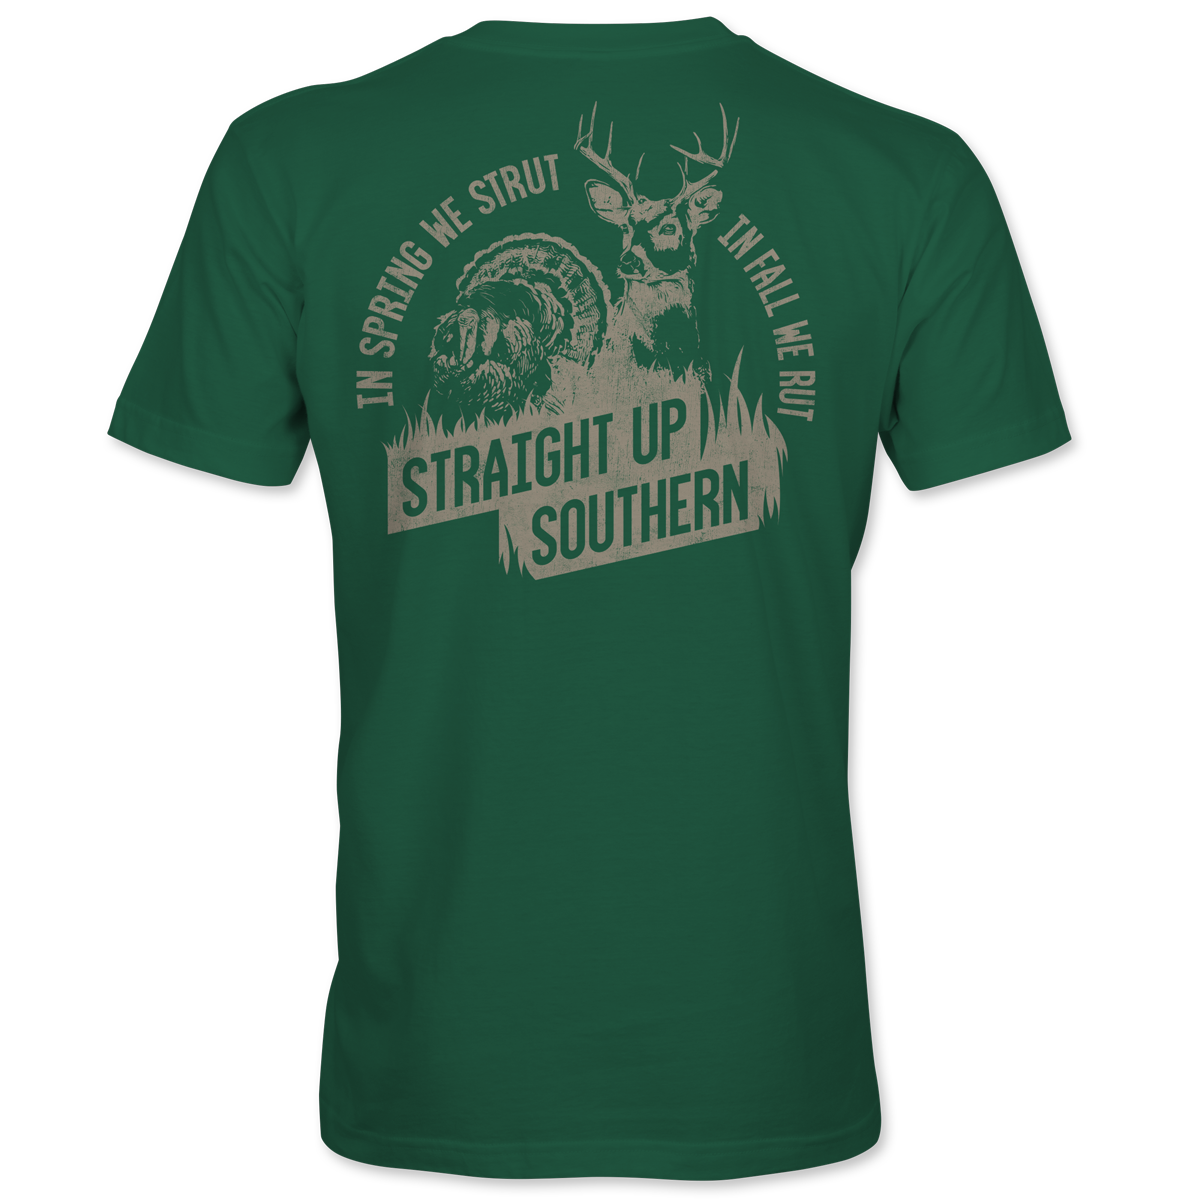 Strut and Rut - Turkey and Whitetail Buck Hunting T-Shirt - Green